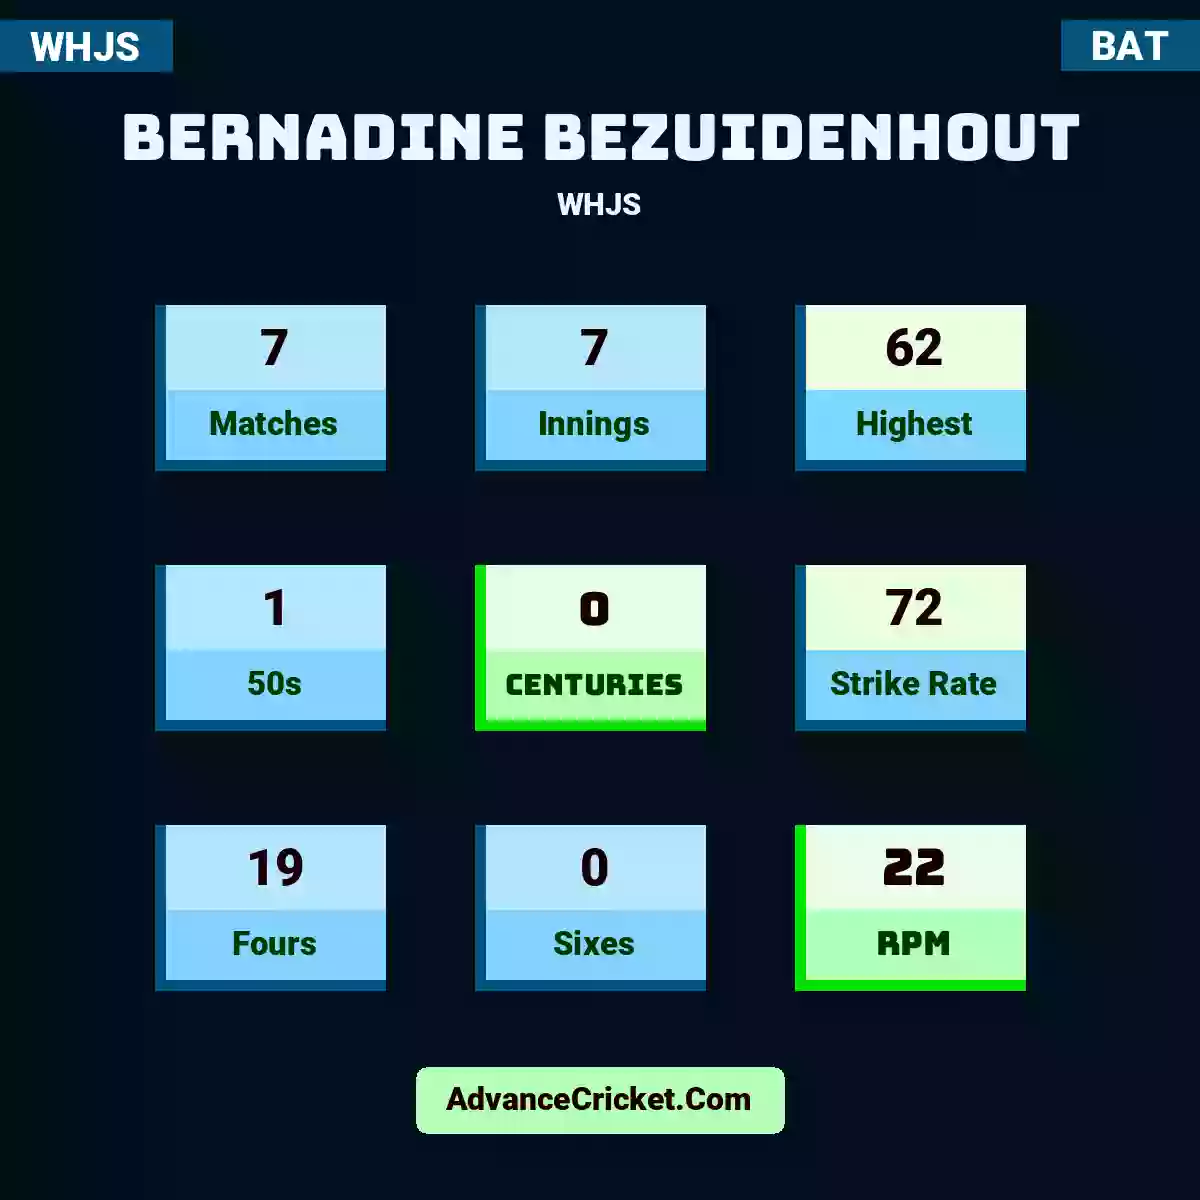 Bernadine Bezuidenhout WHJS , Bernadine Bezuidenhout played 7 matches, scored 62 runs as highest, 1 half-centuries, and 0 centuries, with a strike rate of 72. B.Bezuidenhout hit 19 fours and 0 sixes, with an RPM of 22.